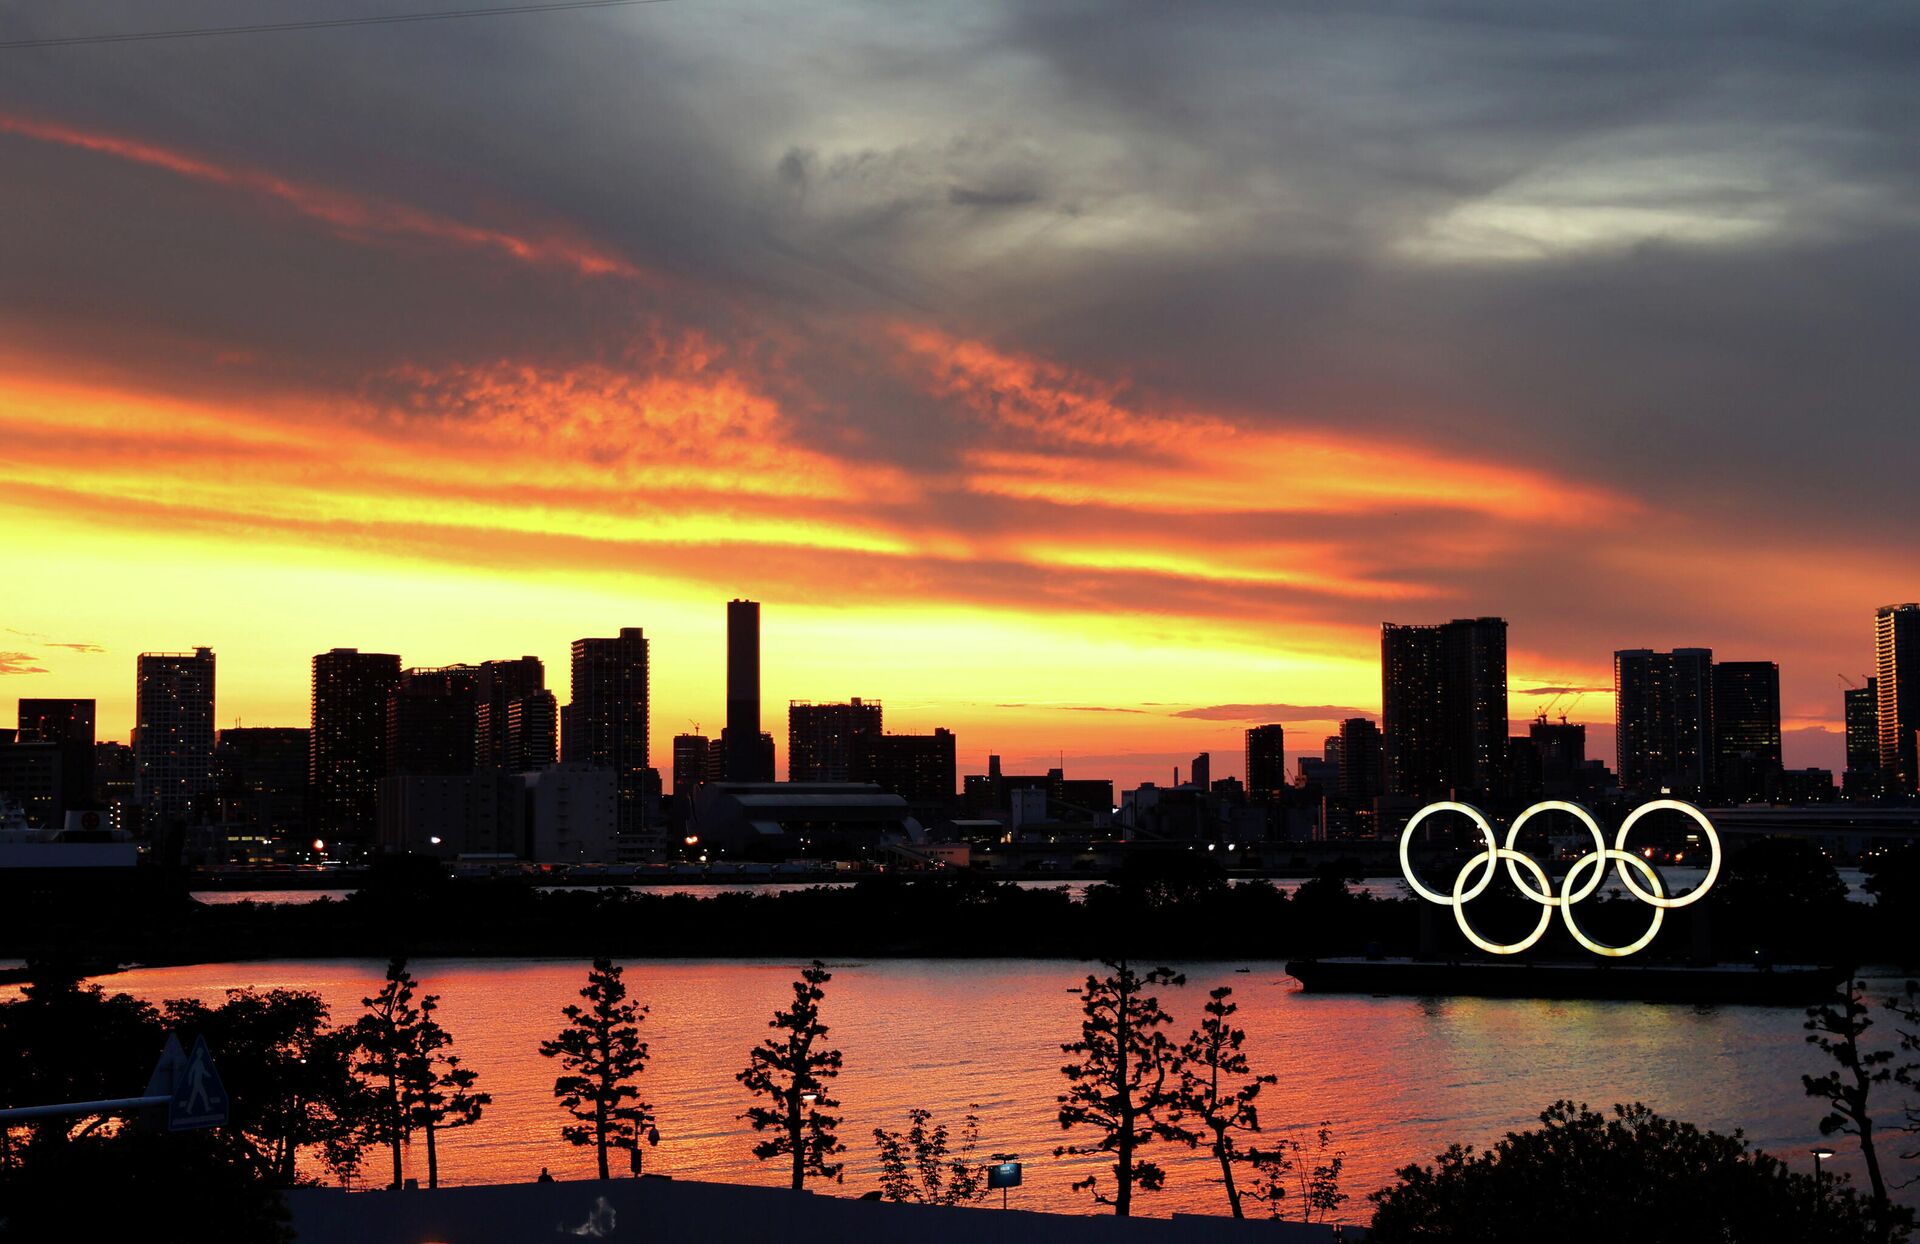 Светящаяся скульптура Олимпийские кольца на Олимпийских играх 2020 в Токио - Sputnik Литва, 1920, 22.07.2021